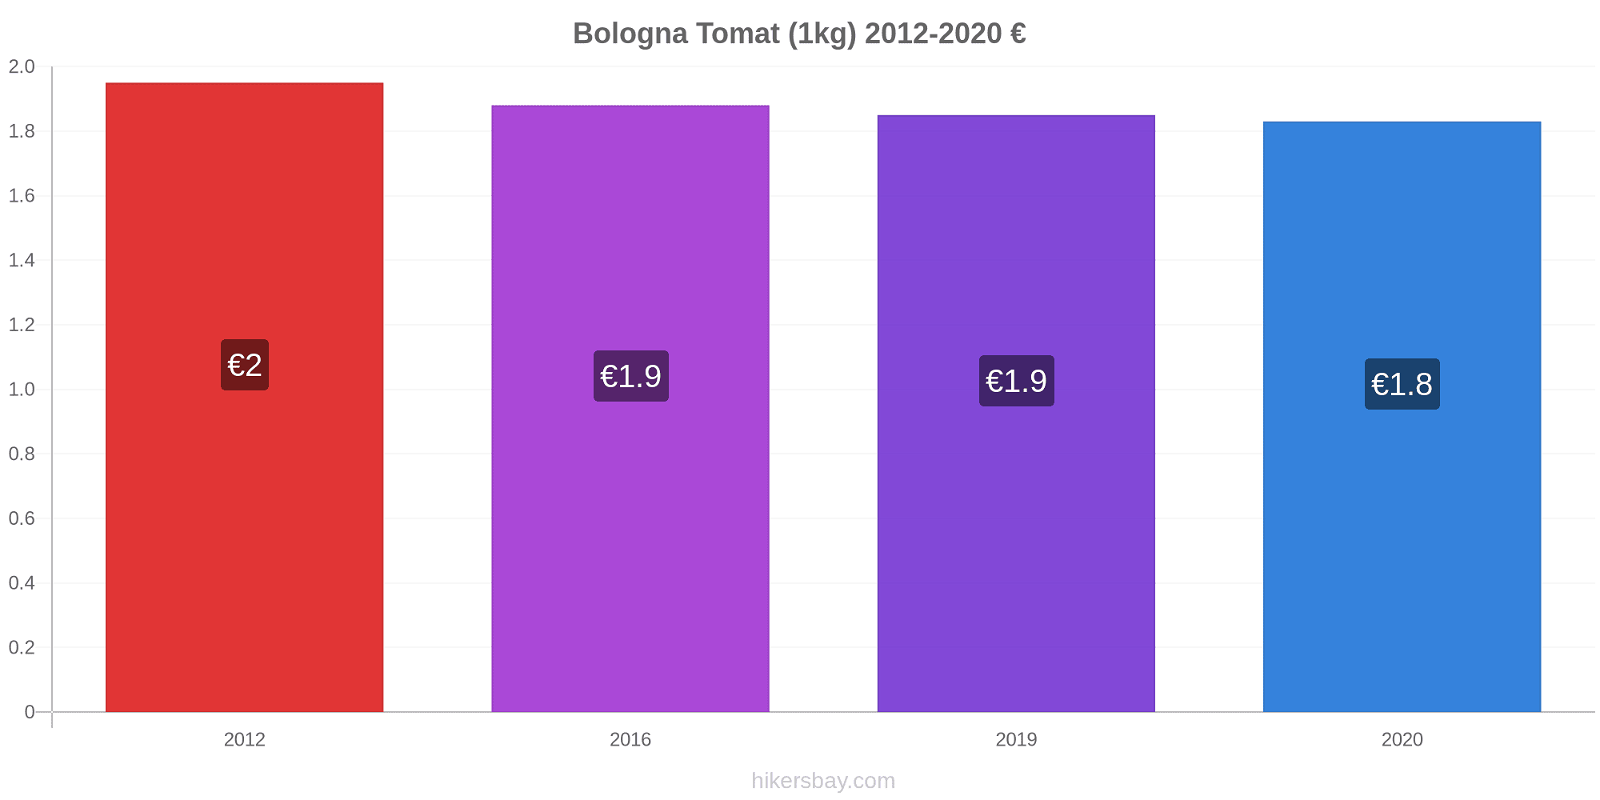 Bologna prisendringer Tomat (1kg) hikersbay.com